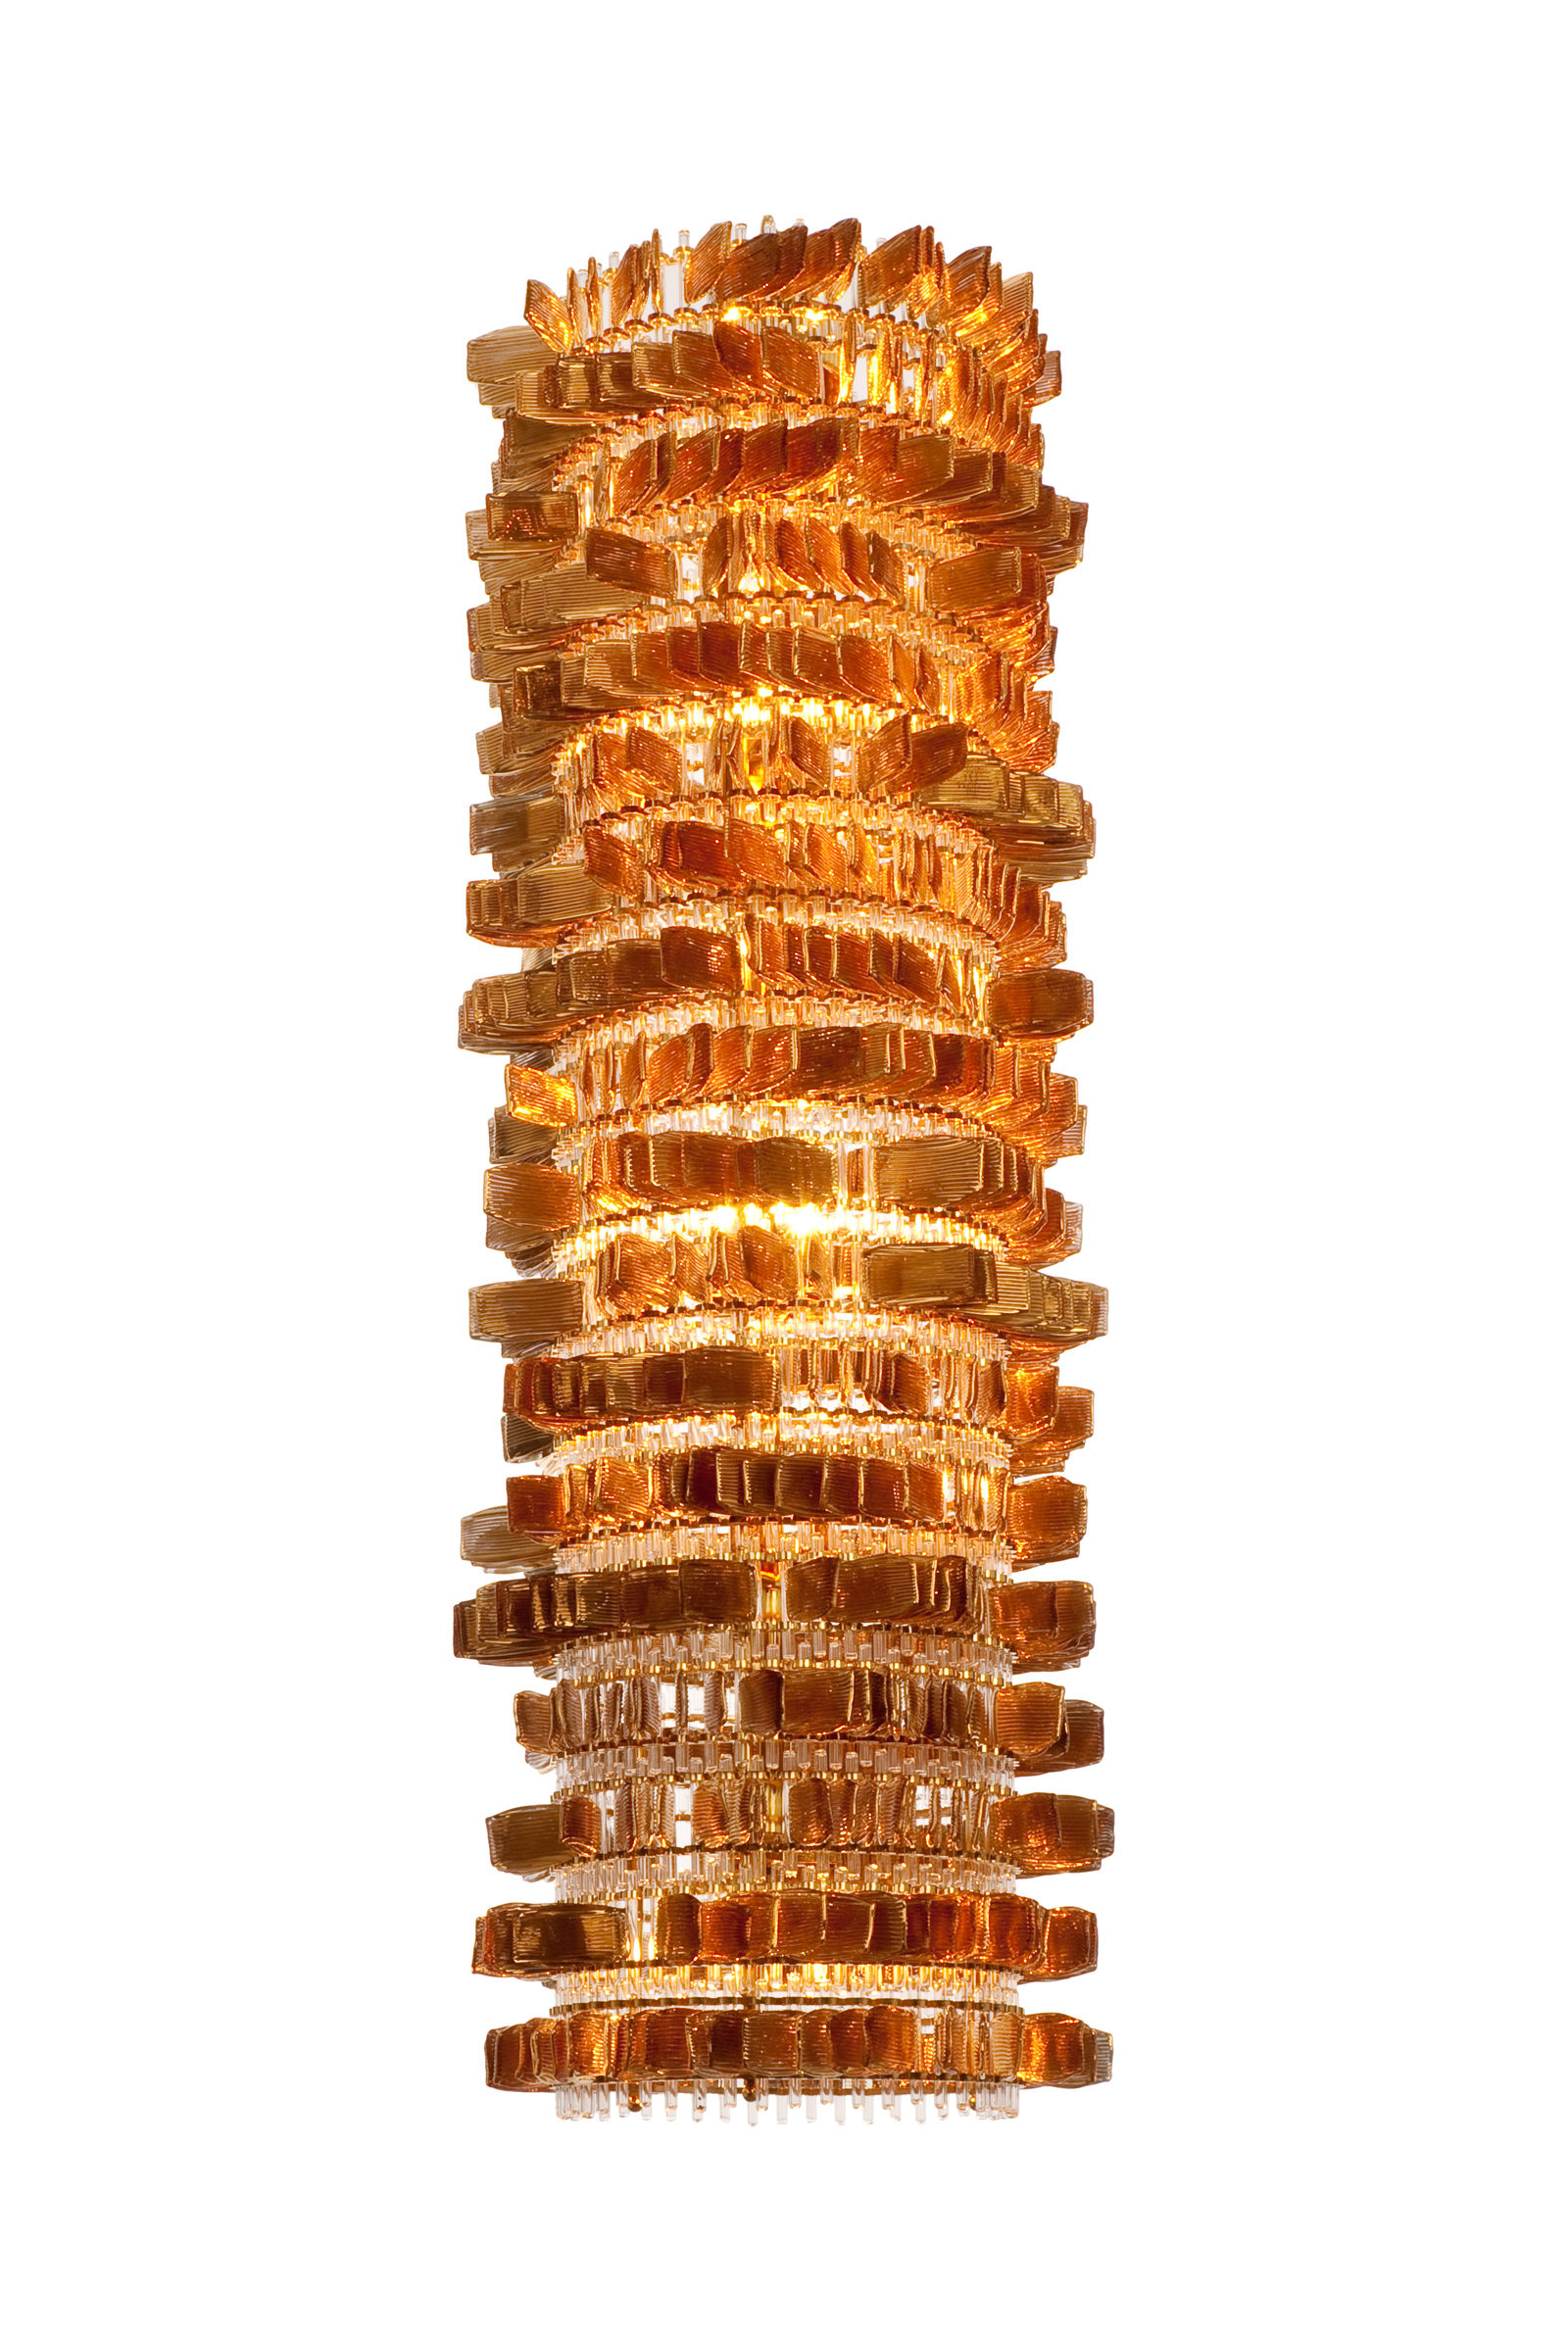 anemone-suspension-110-gold-veronese-tal-lancman-maurizio-galante-11.jpg